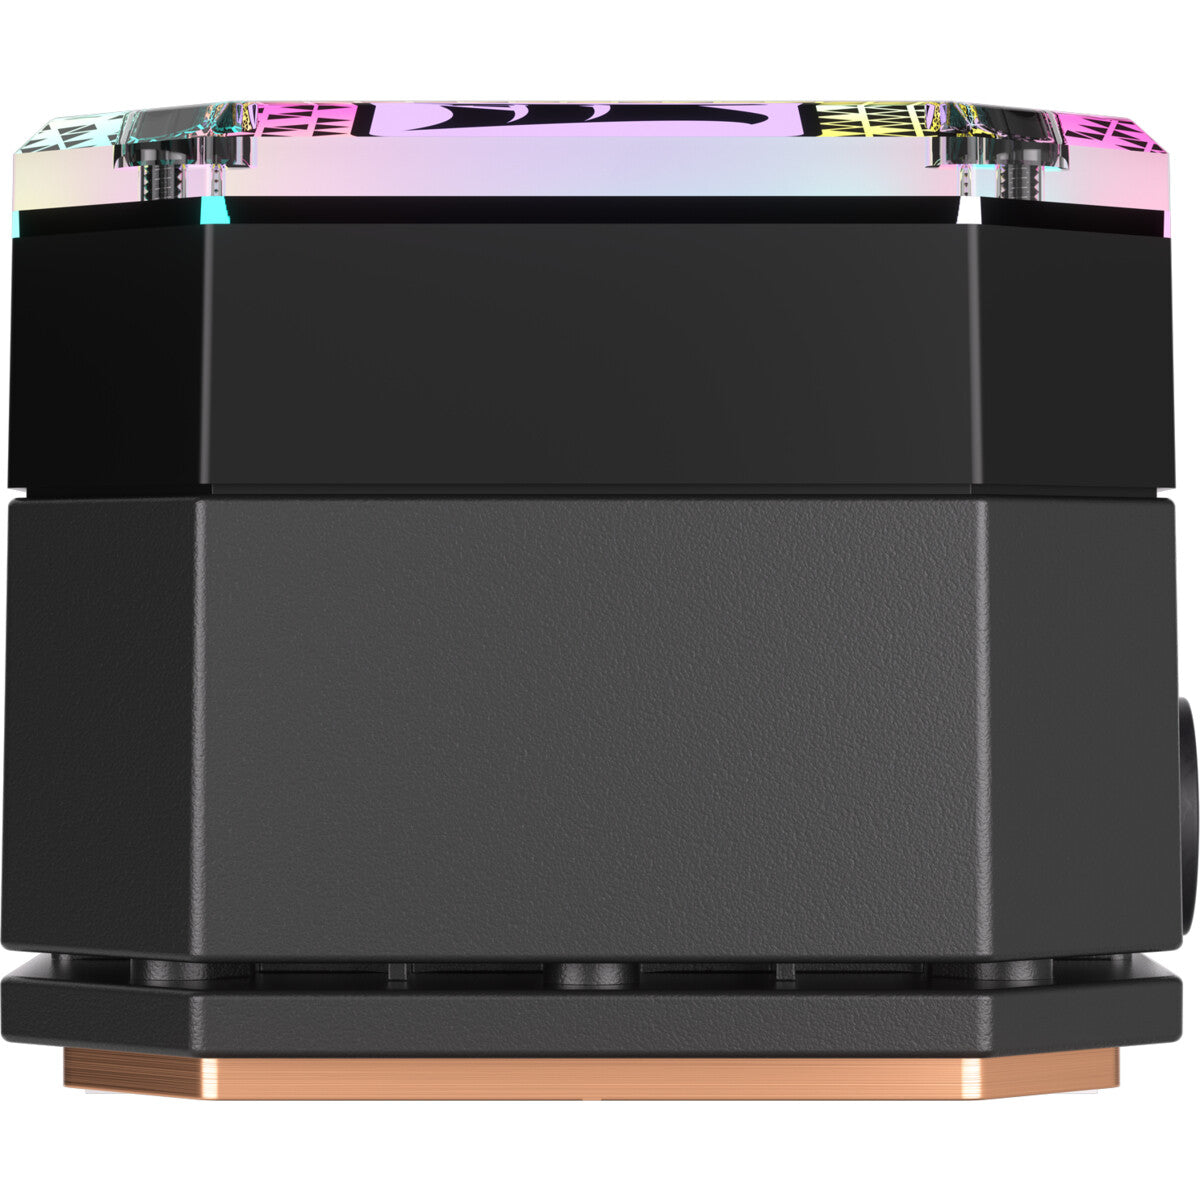 Corsair iCUE H150i ELITE CAPELLIX XT - All-in-one Liquid Processor Cooler in Black - 360mm